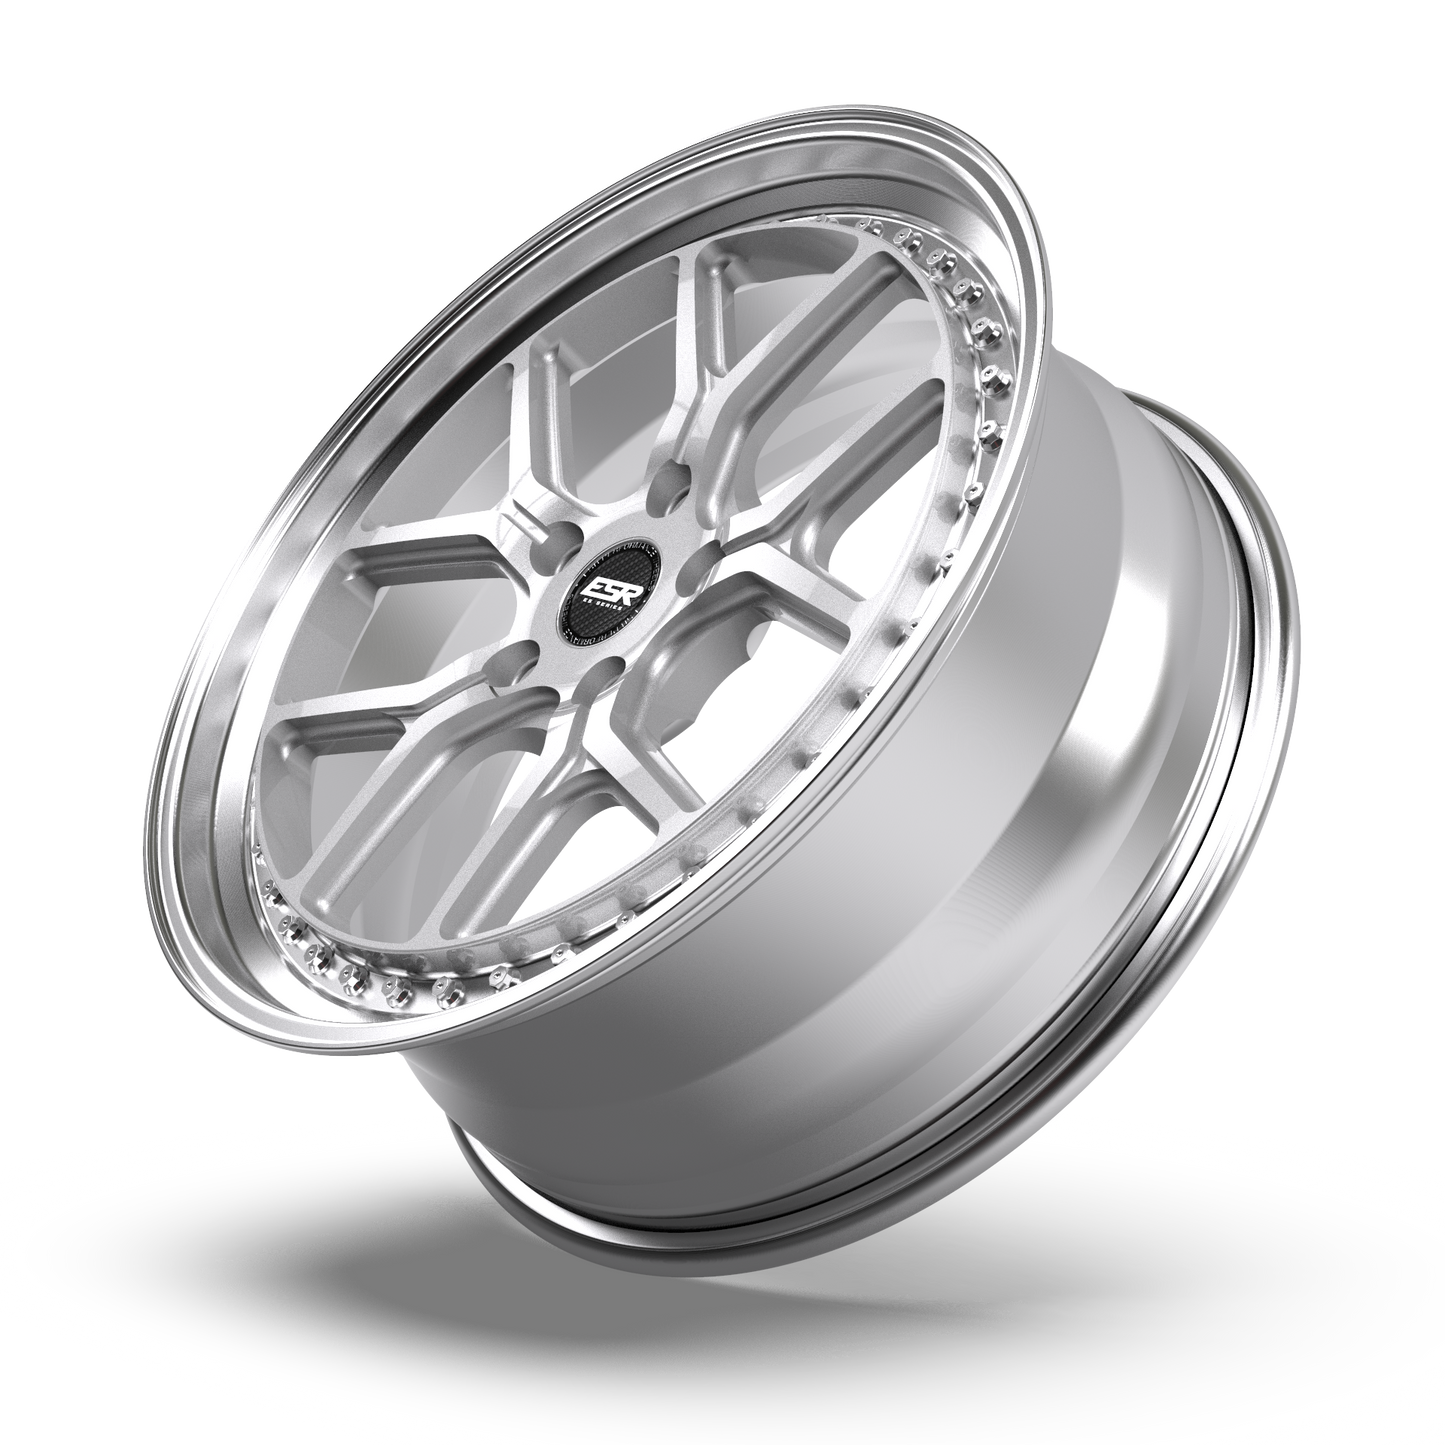 ESR Wheels CS2 Hyper Silver-Wheels-ESR Wheels-JDMuscle